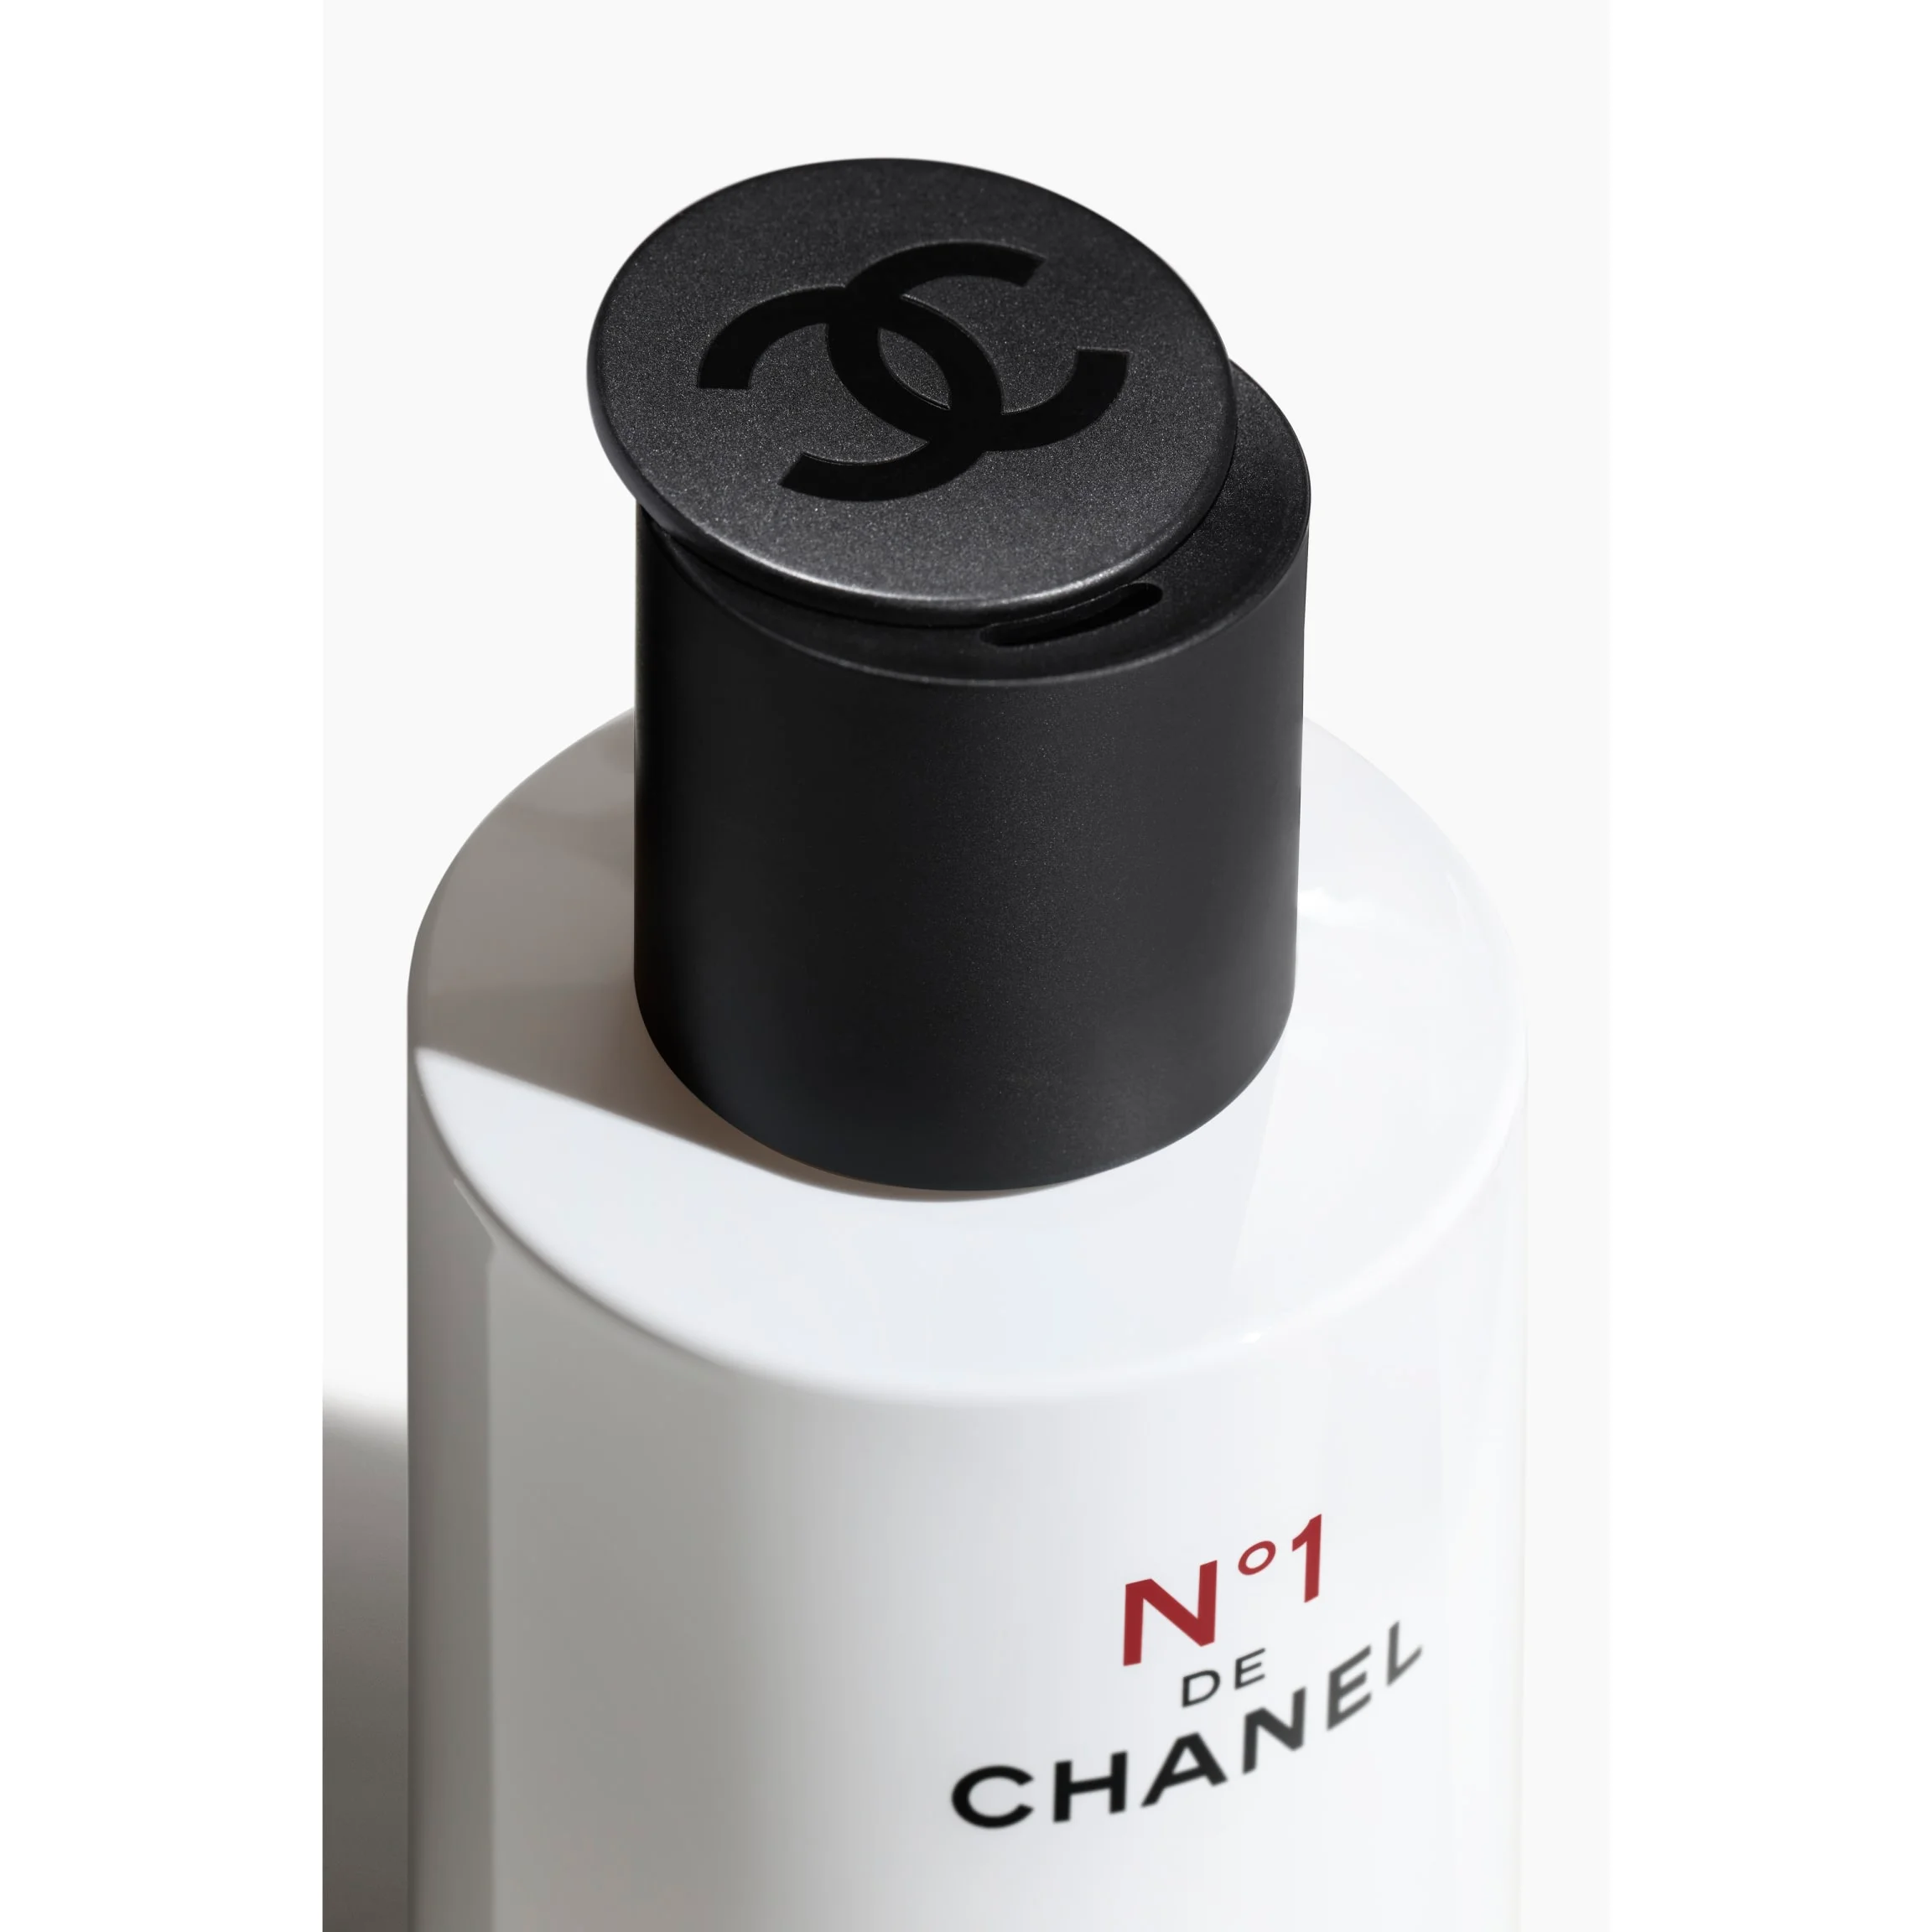 Revitalizing Face Lotion Chanel N1 De Chanel Revitalizing Lotion